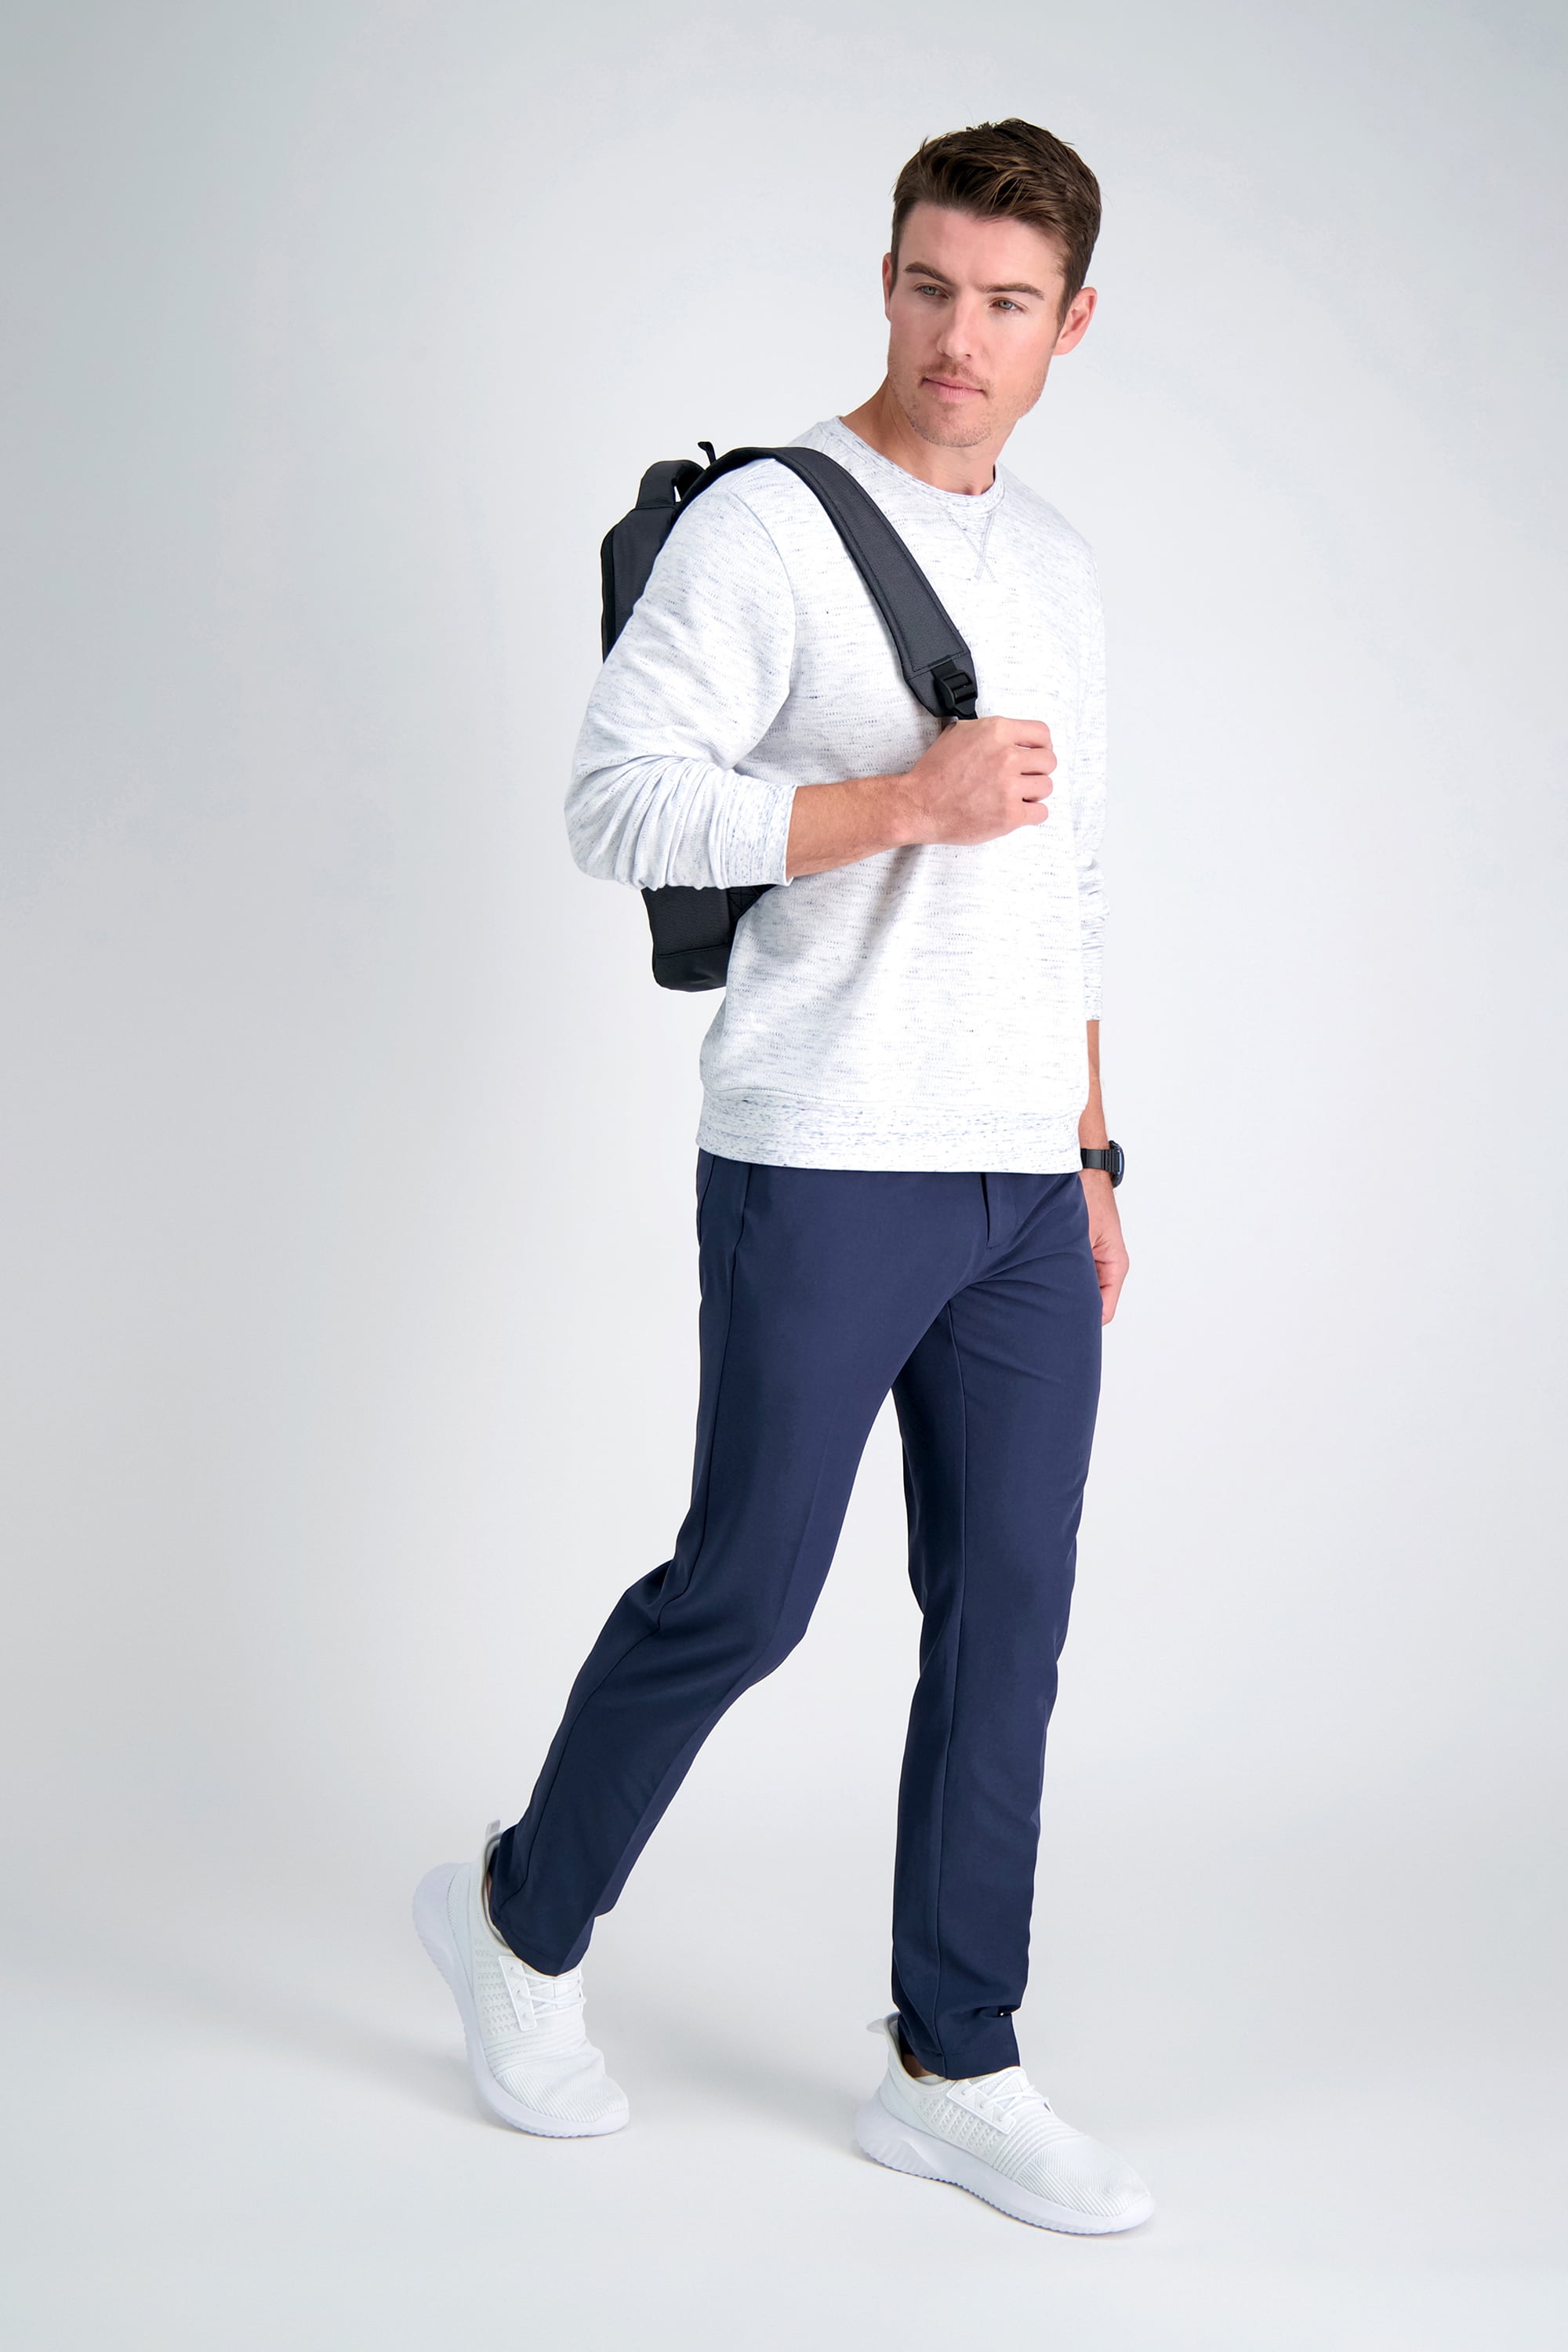 Nordstrom Trim Fit Wool Blend Dress Pants  Tech Smart Line  38 X 38  NWT   eBay